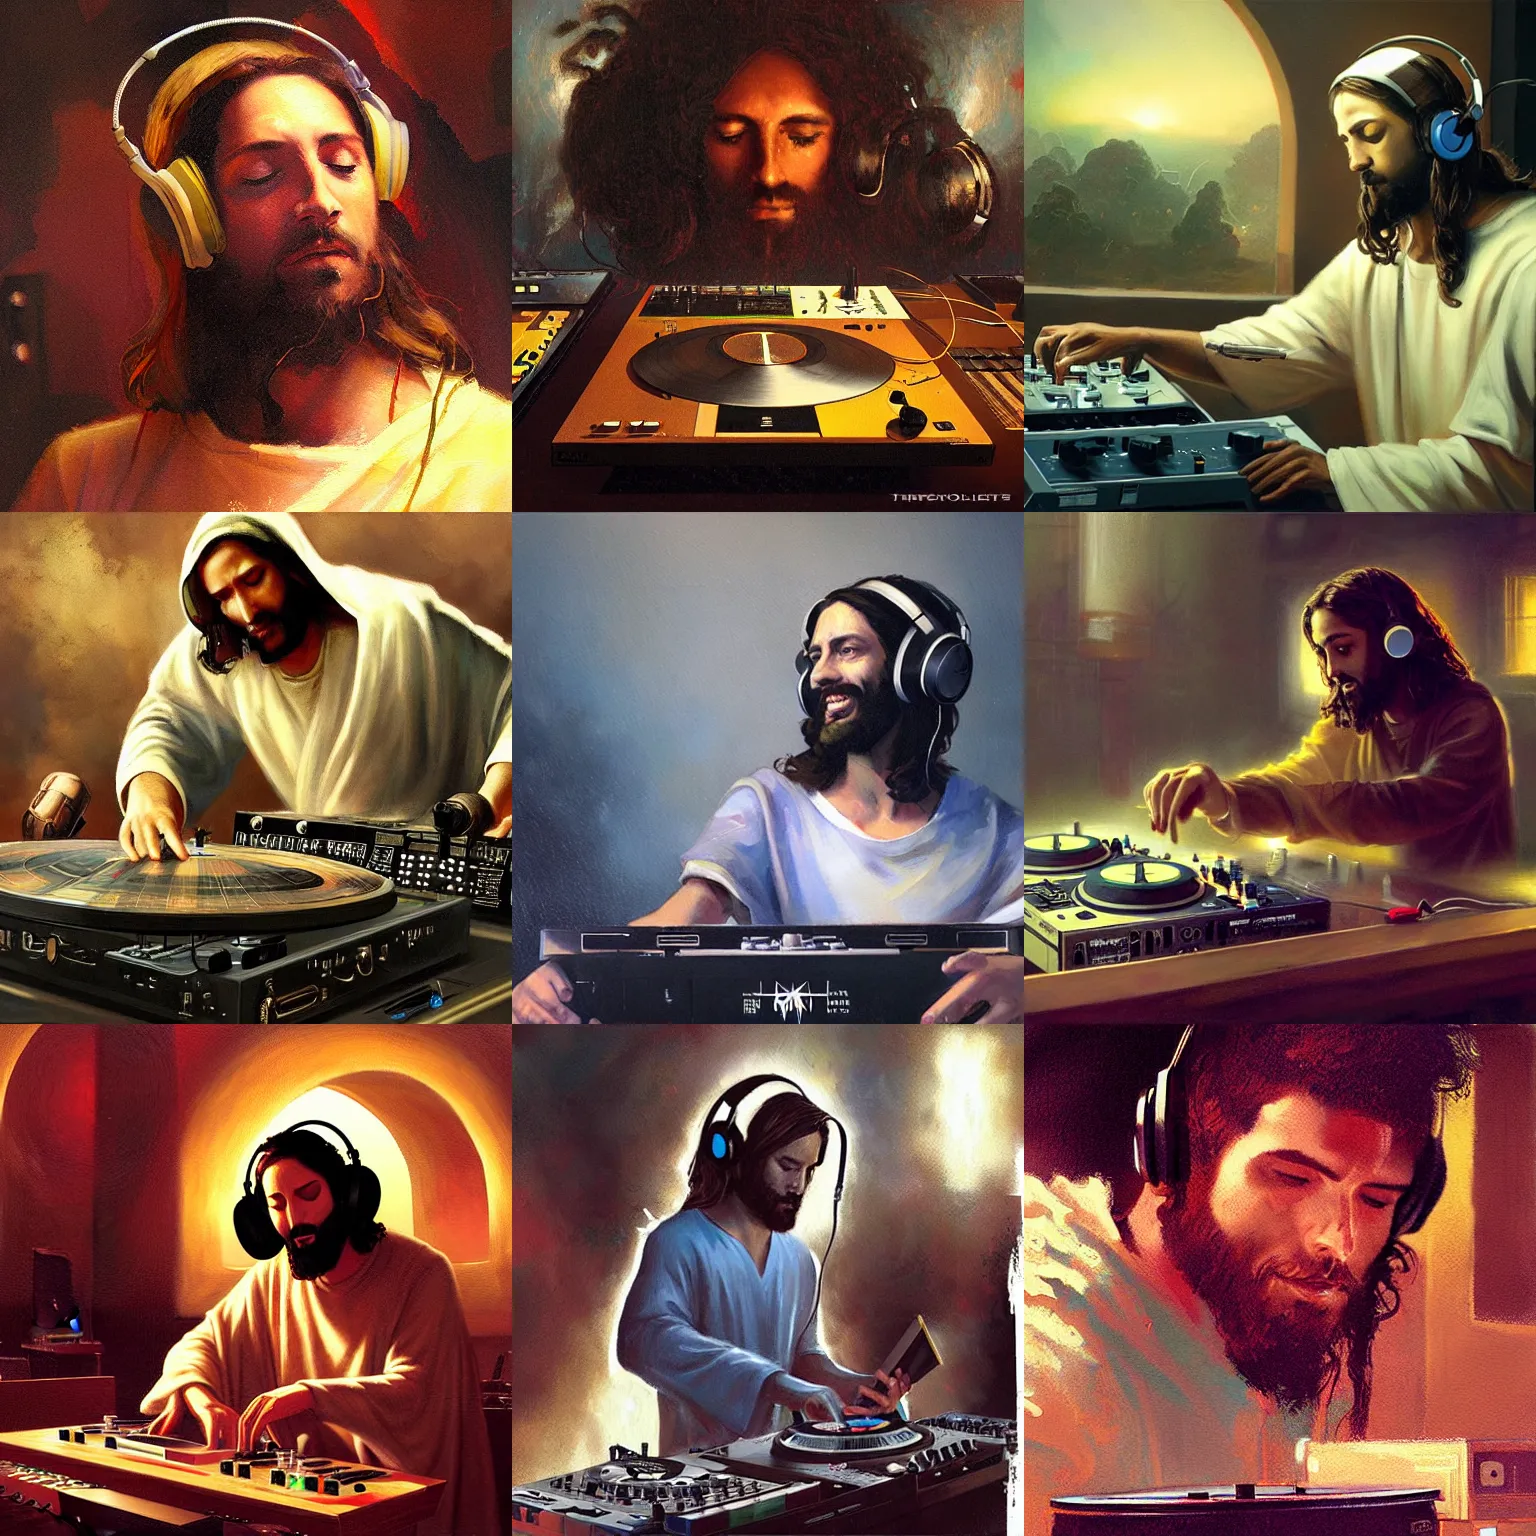 Prompt: a painting of jesus wearing headphones DJing with DJ turntables, craig mullins, greg rutkowski